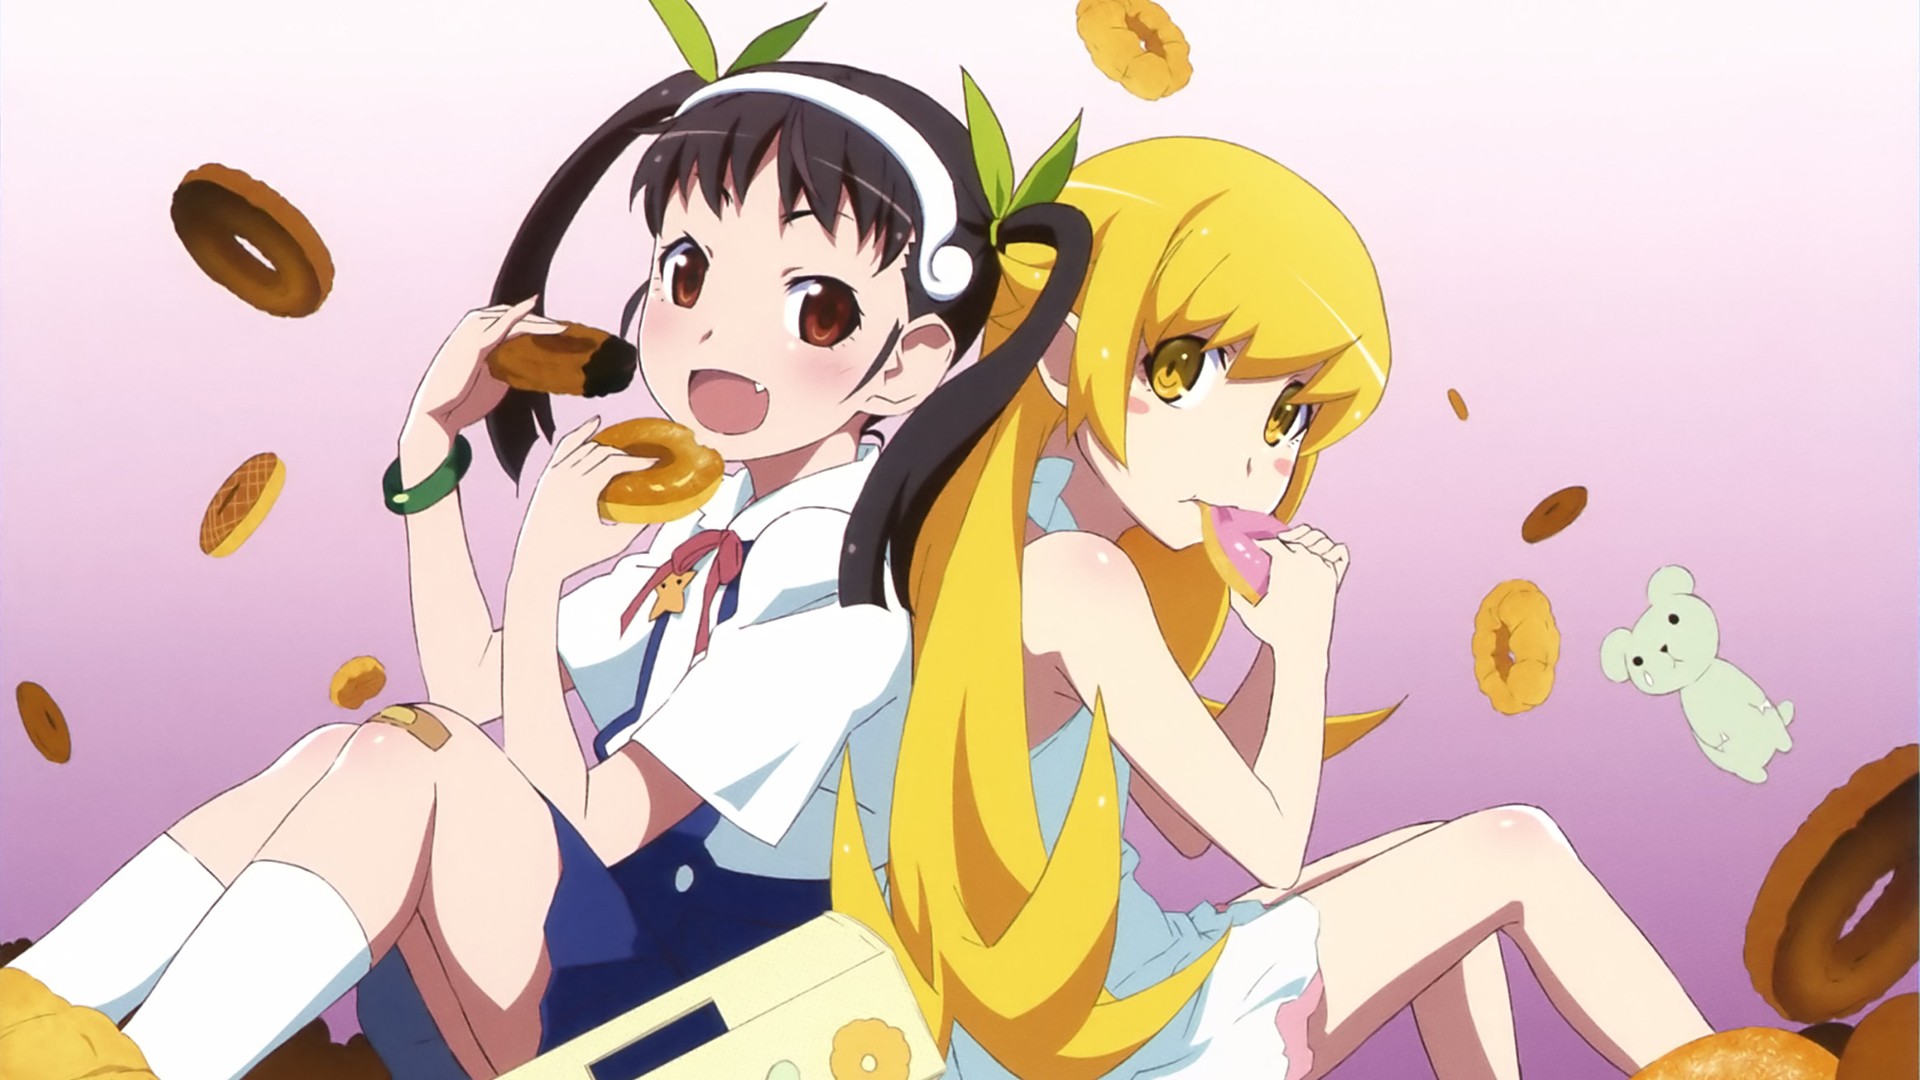 Anime 1920x1080 Monogatari Series Hachikuji Mayoi Oshino Shinobu donut loli bandages anime girls anime girls eating two women food sweets gradient sitting blonde yellow eyes open mouth